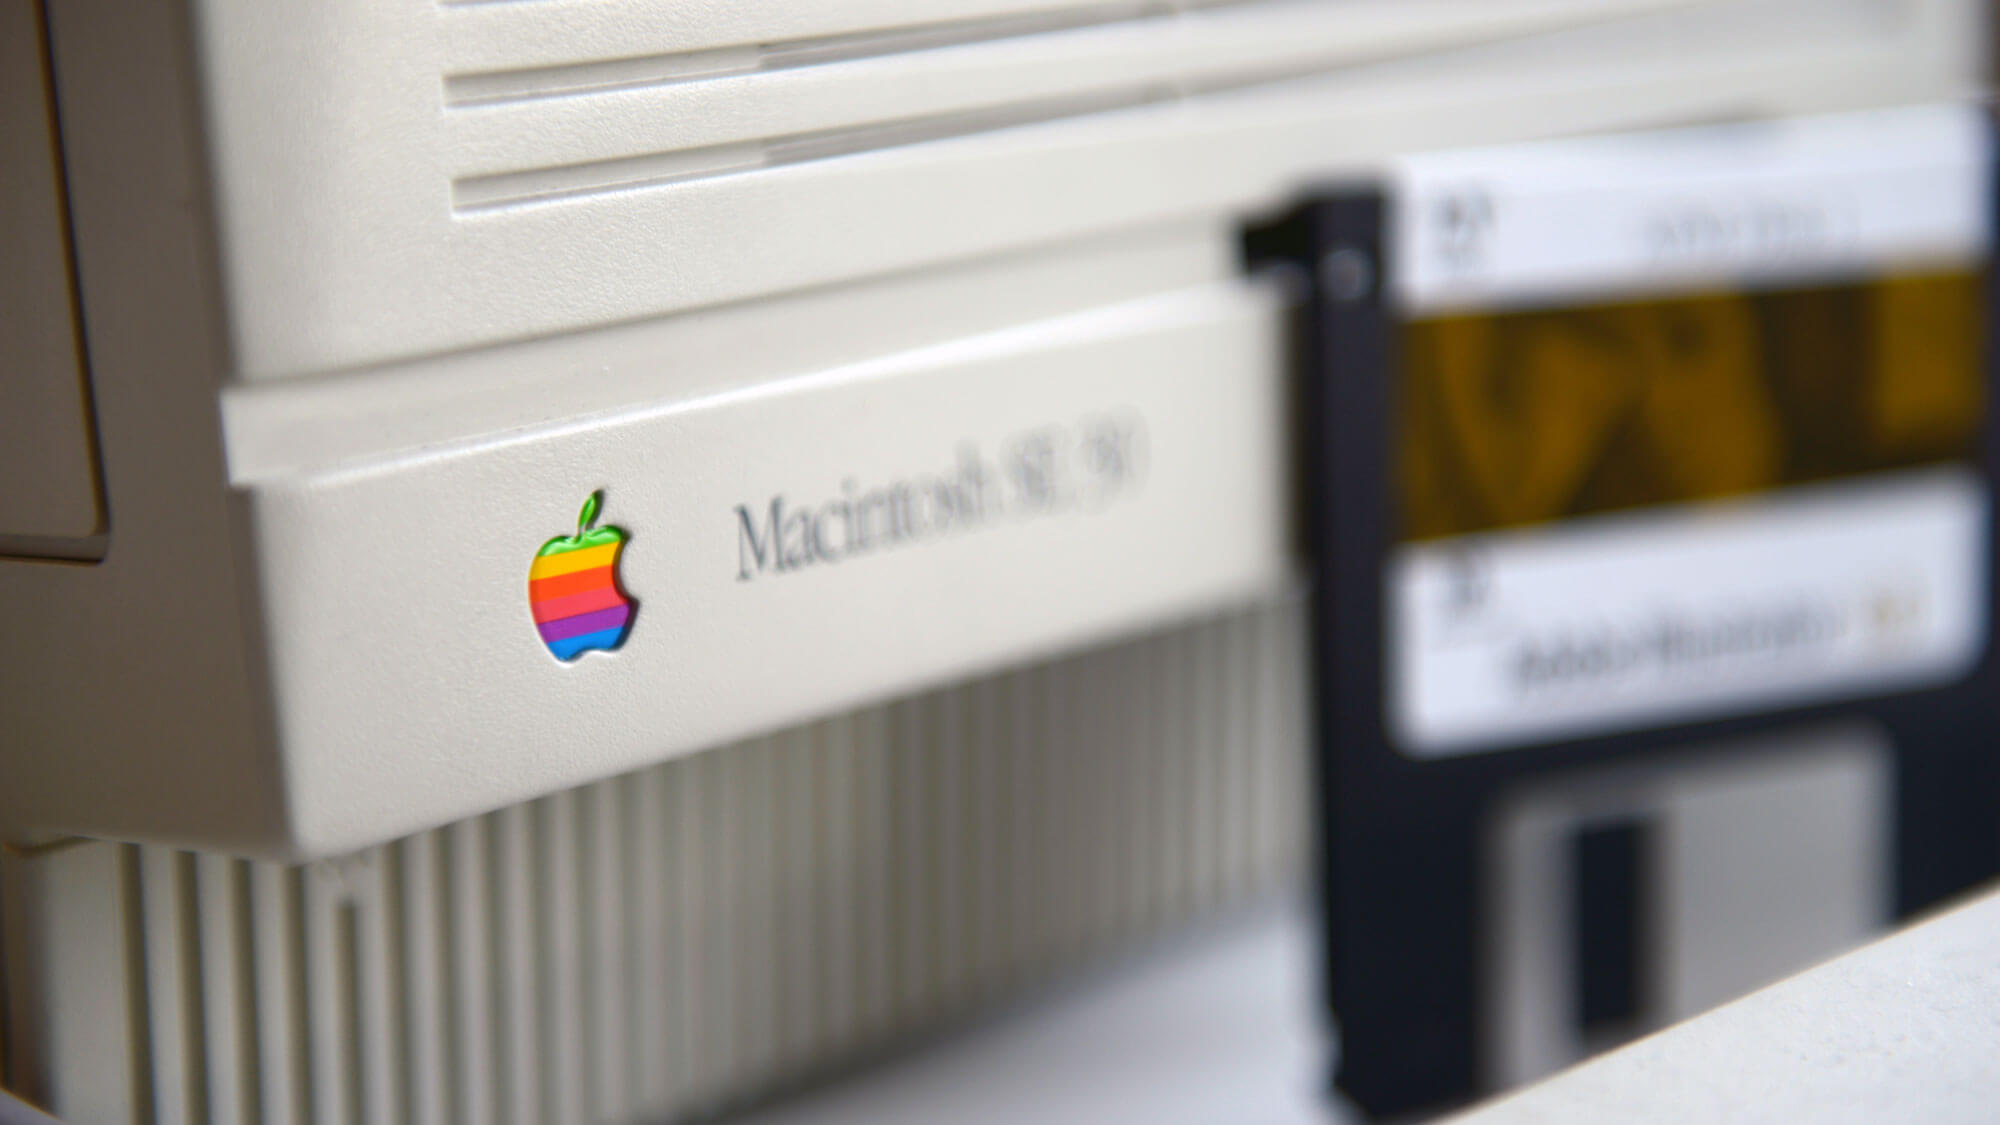 A Macintosh computer